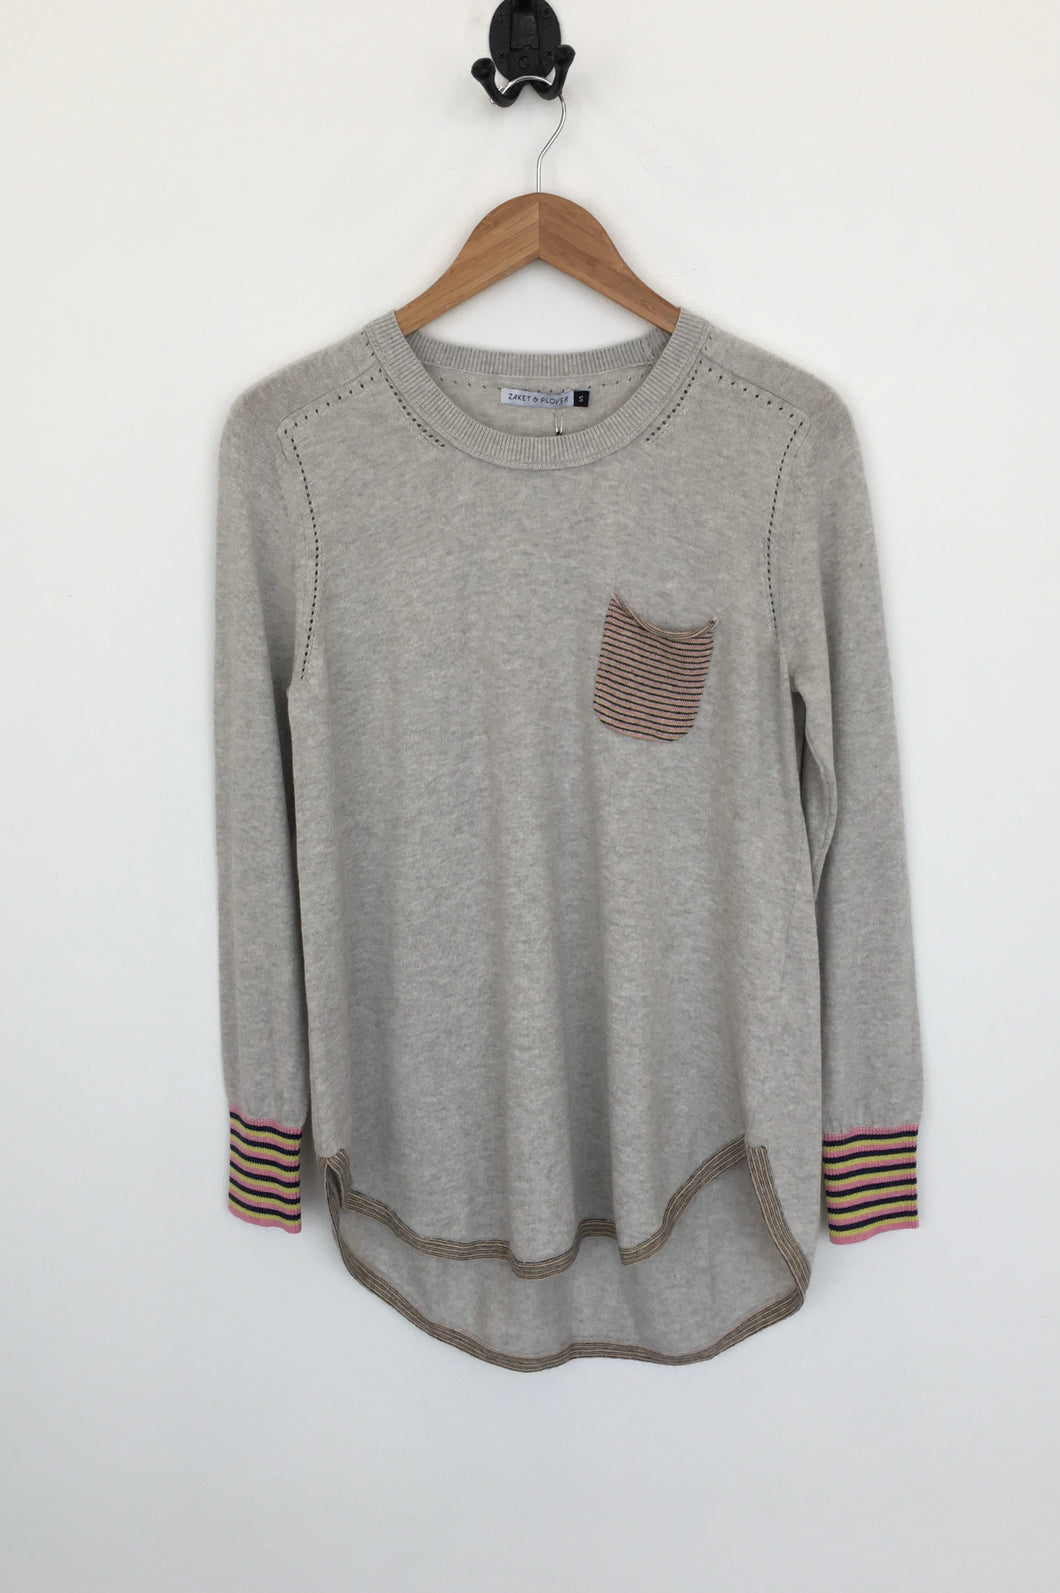 Zaket & Plover Stripe Pocket Sweater